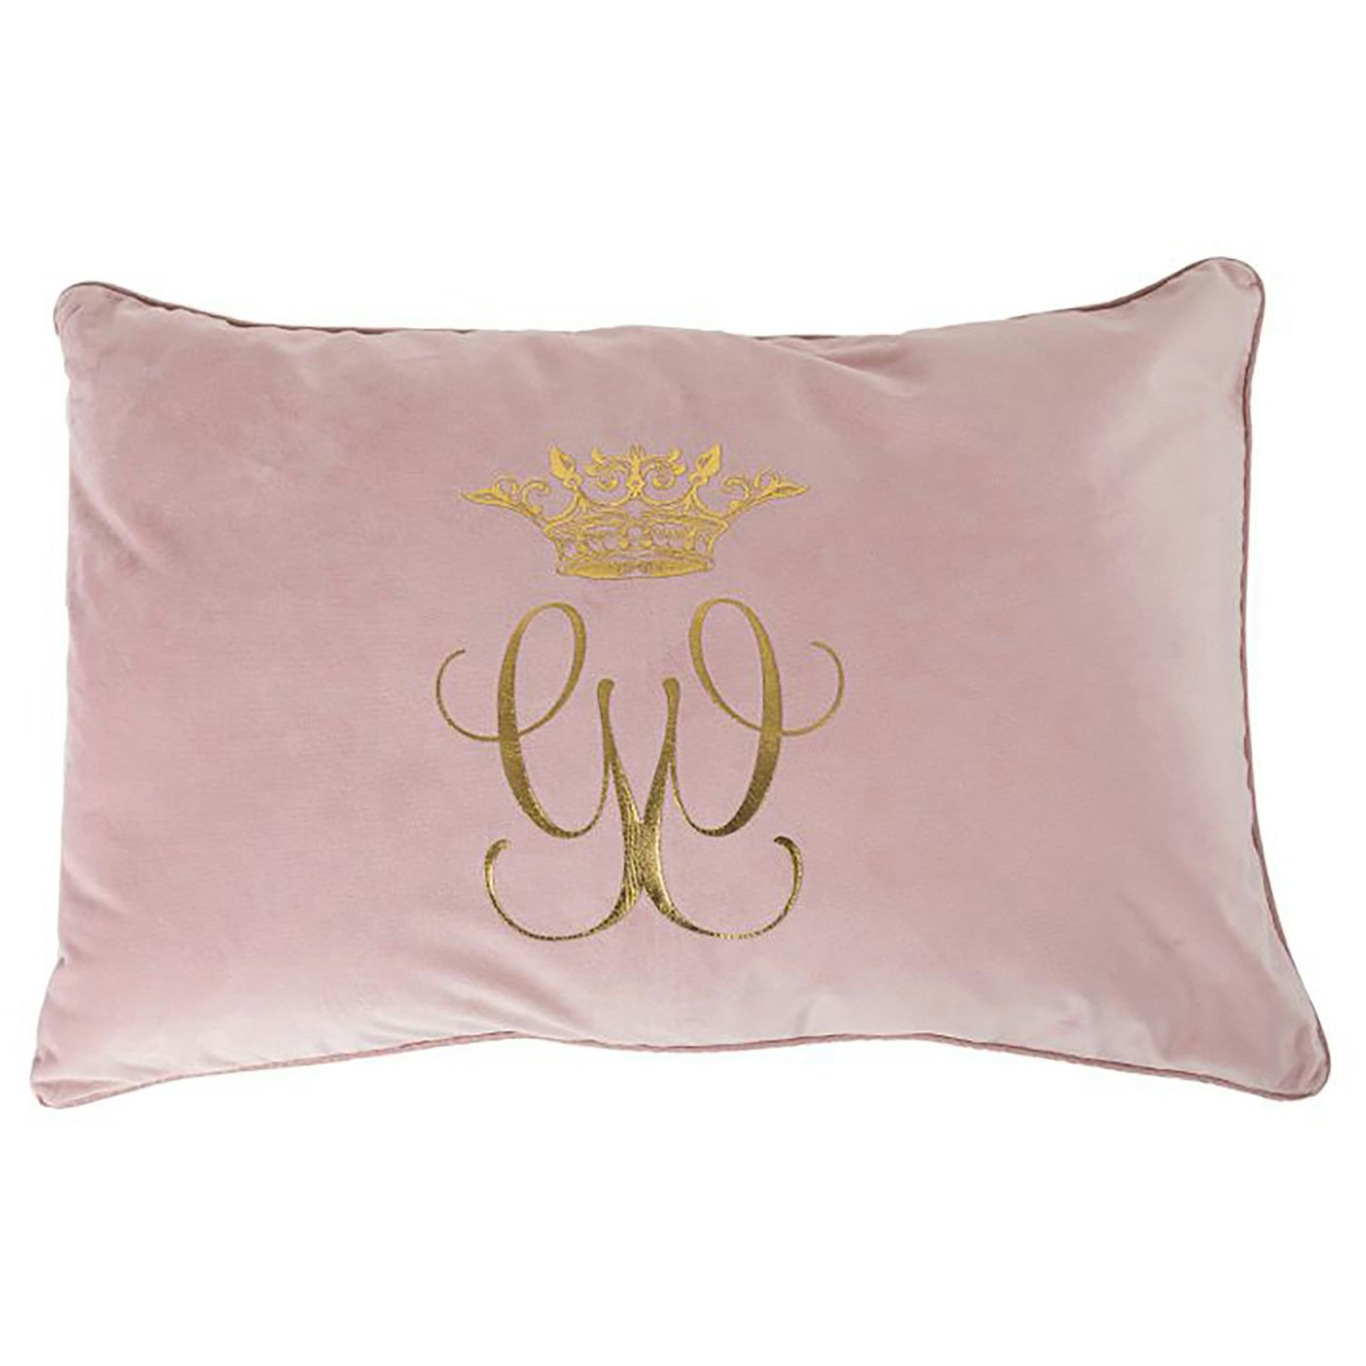 Royal Cushion Cover Pink, 40x60 cm